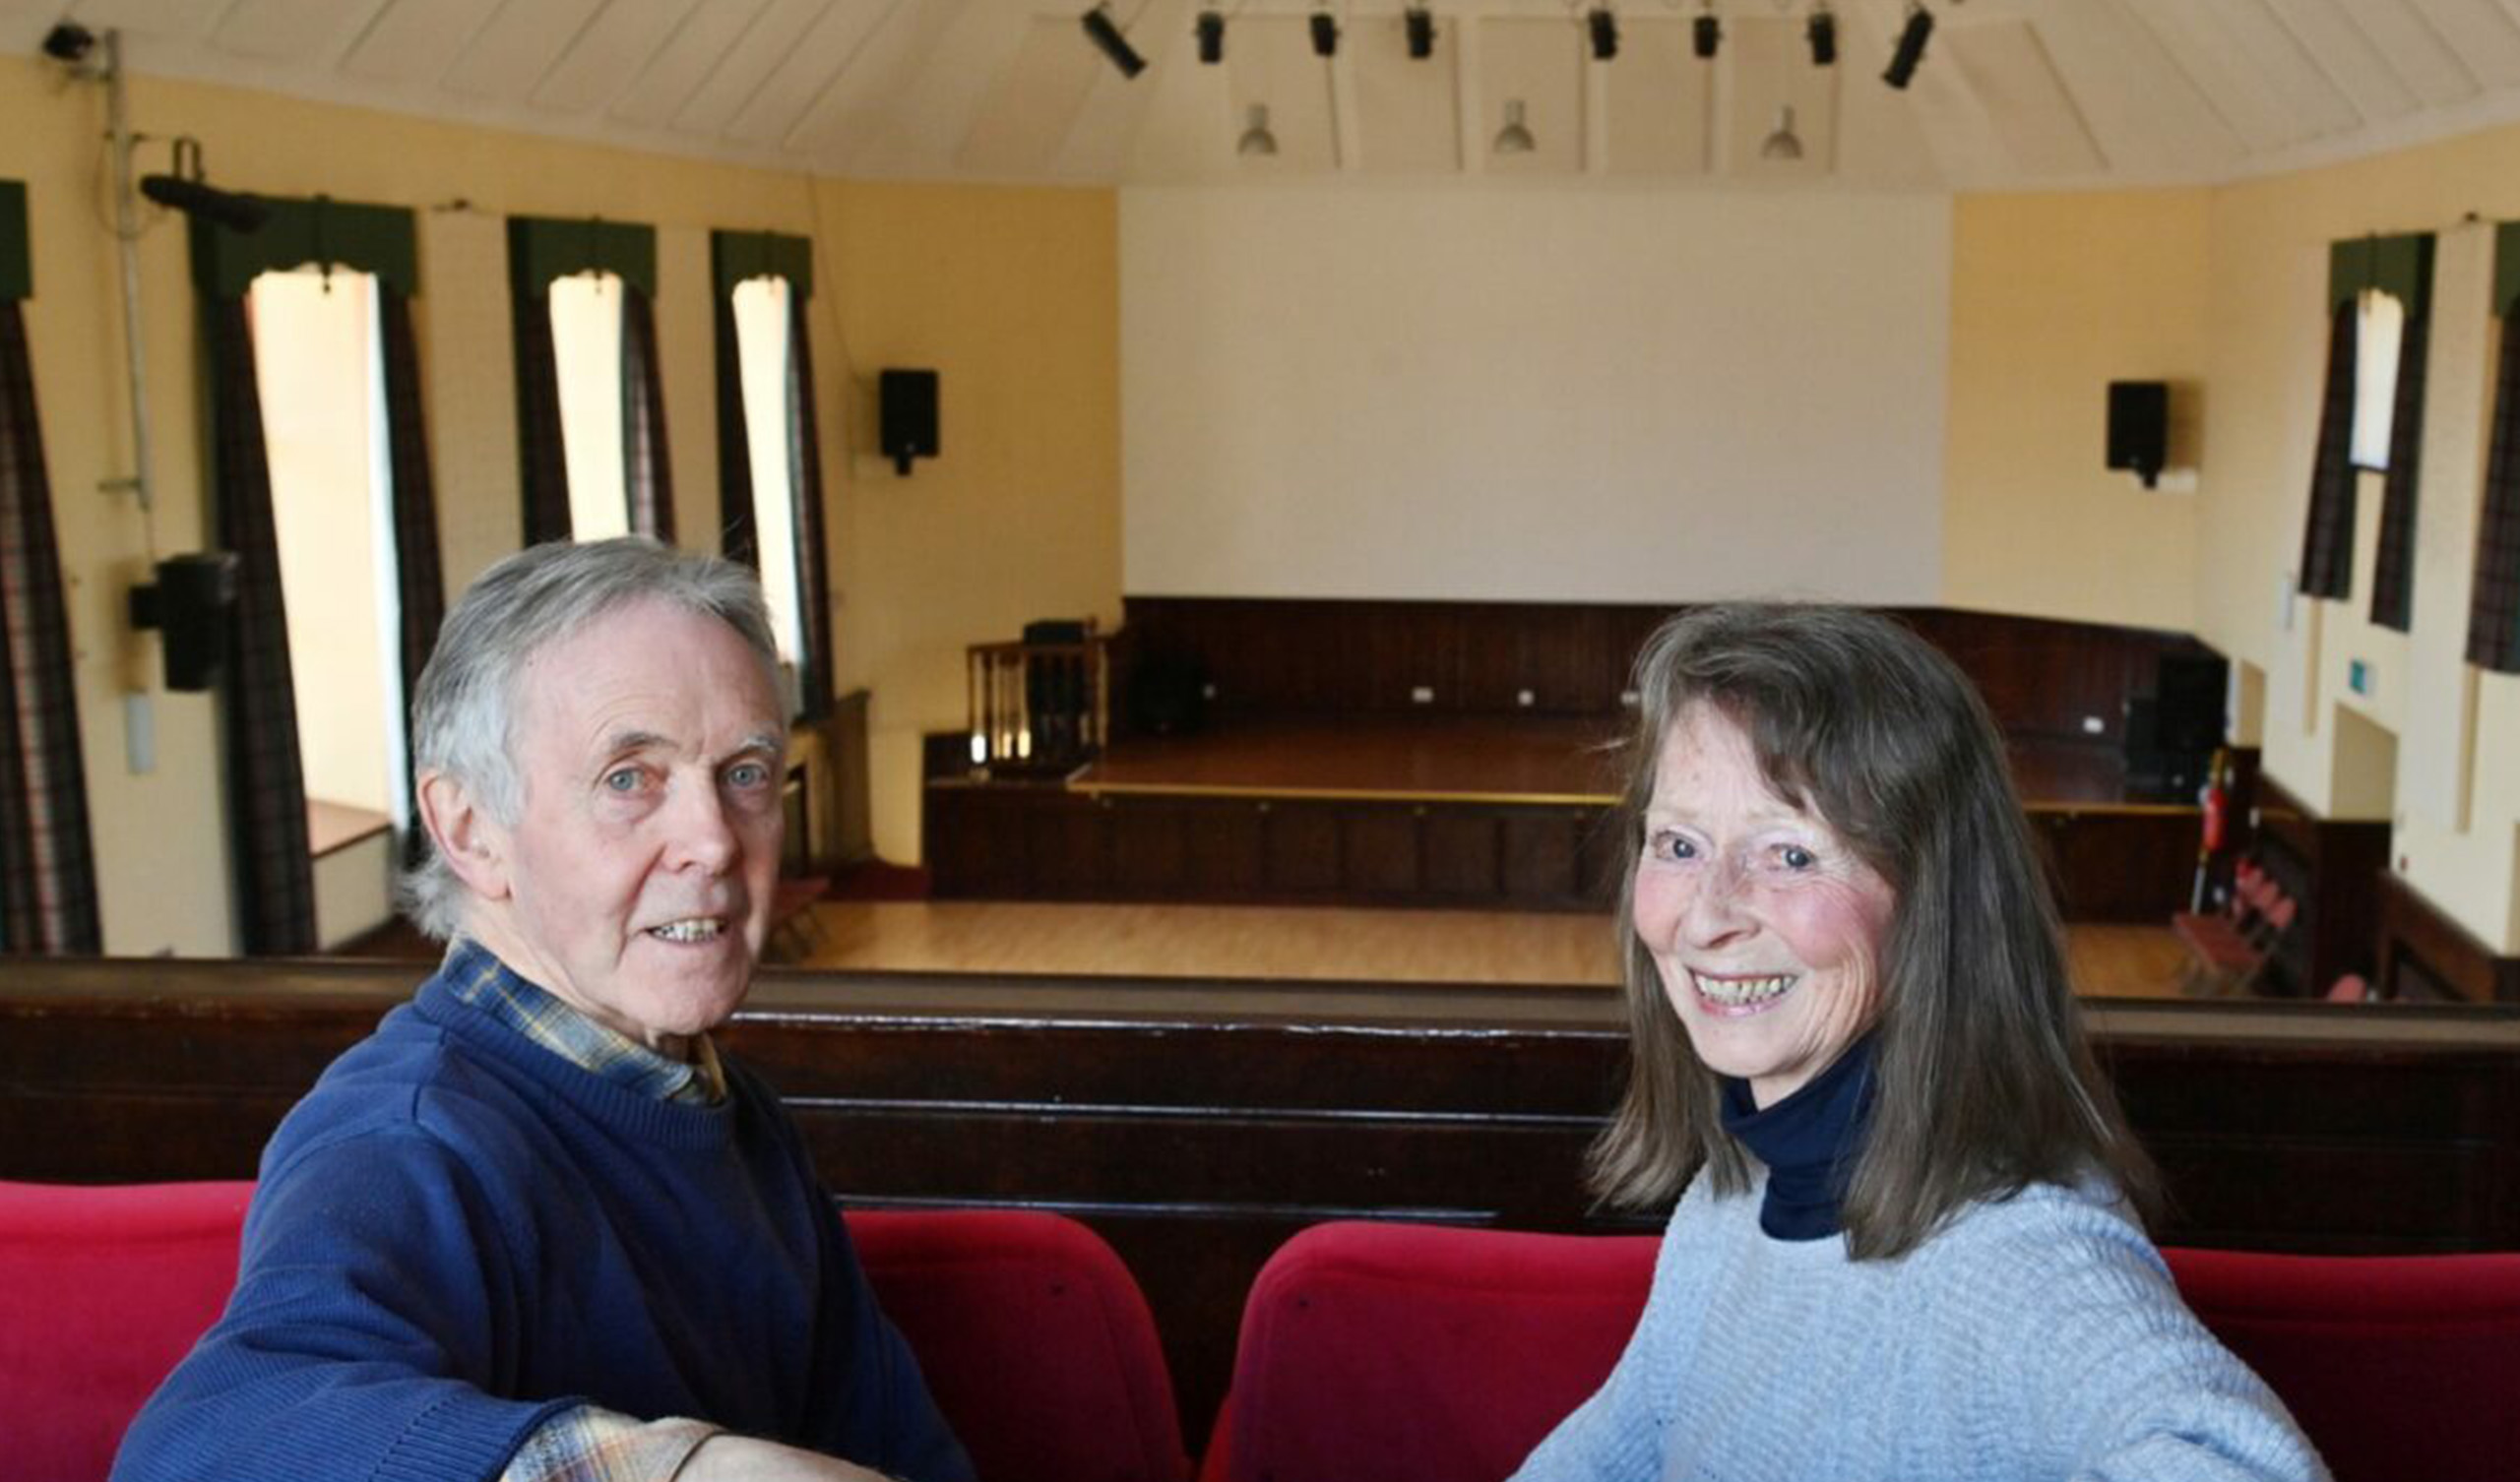 Keith Hart and his wife, Liz caretakers of Victoria Hall, Ellon